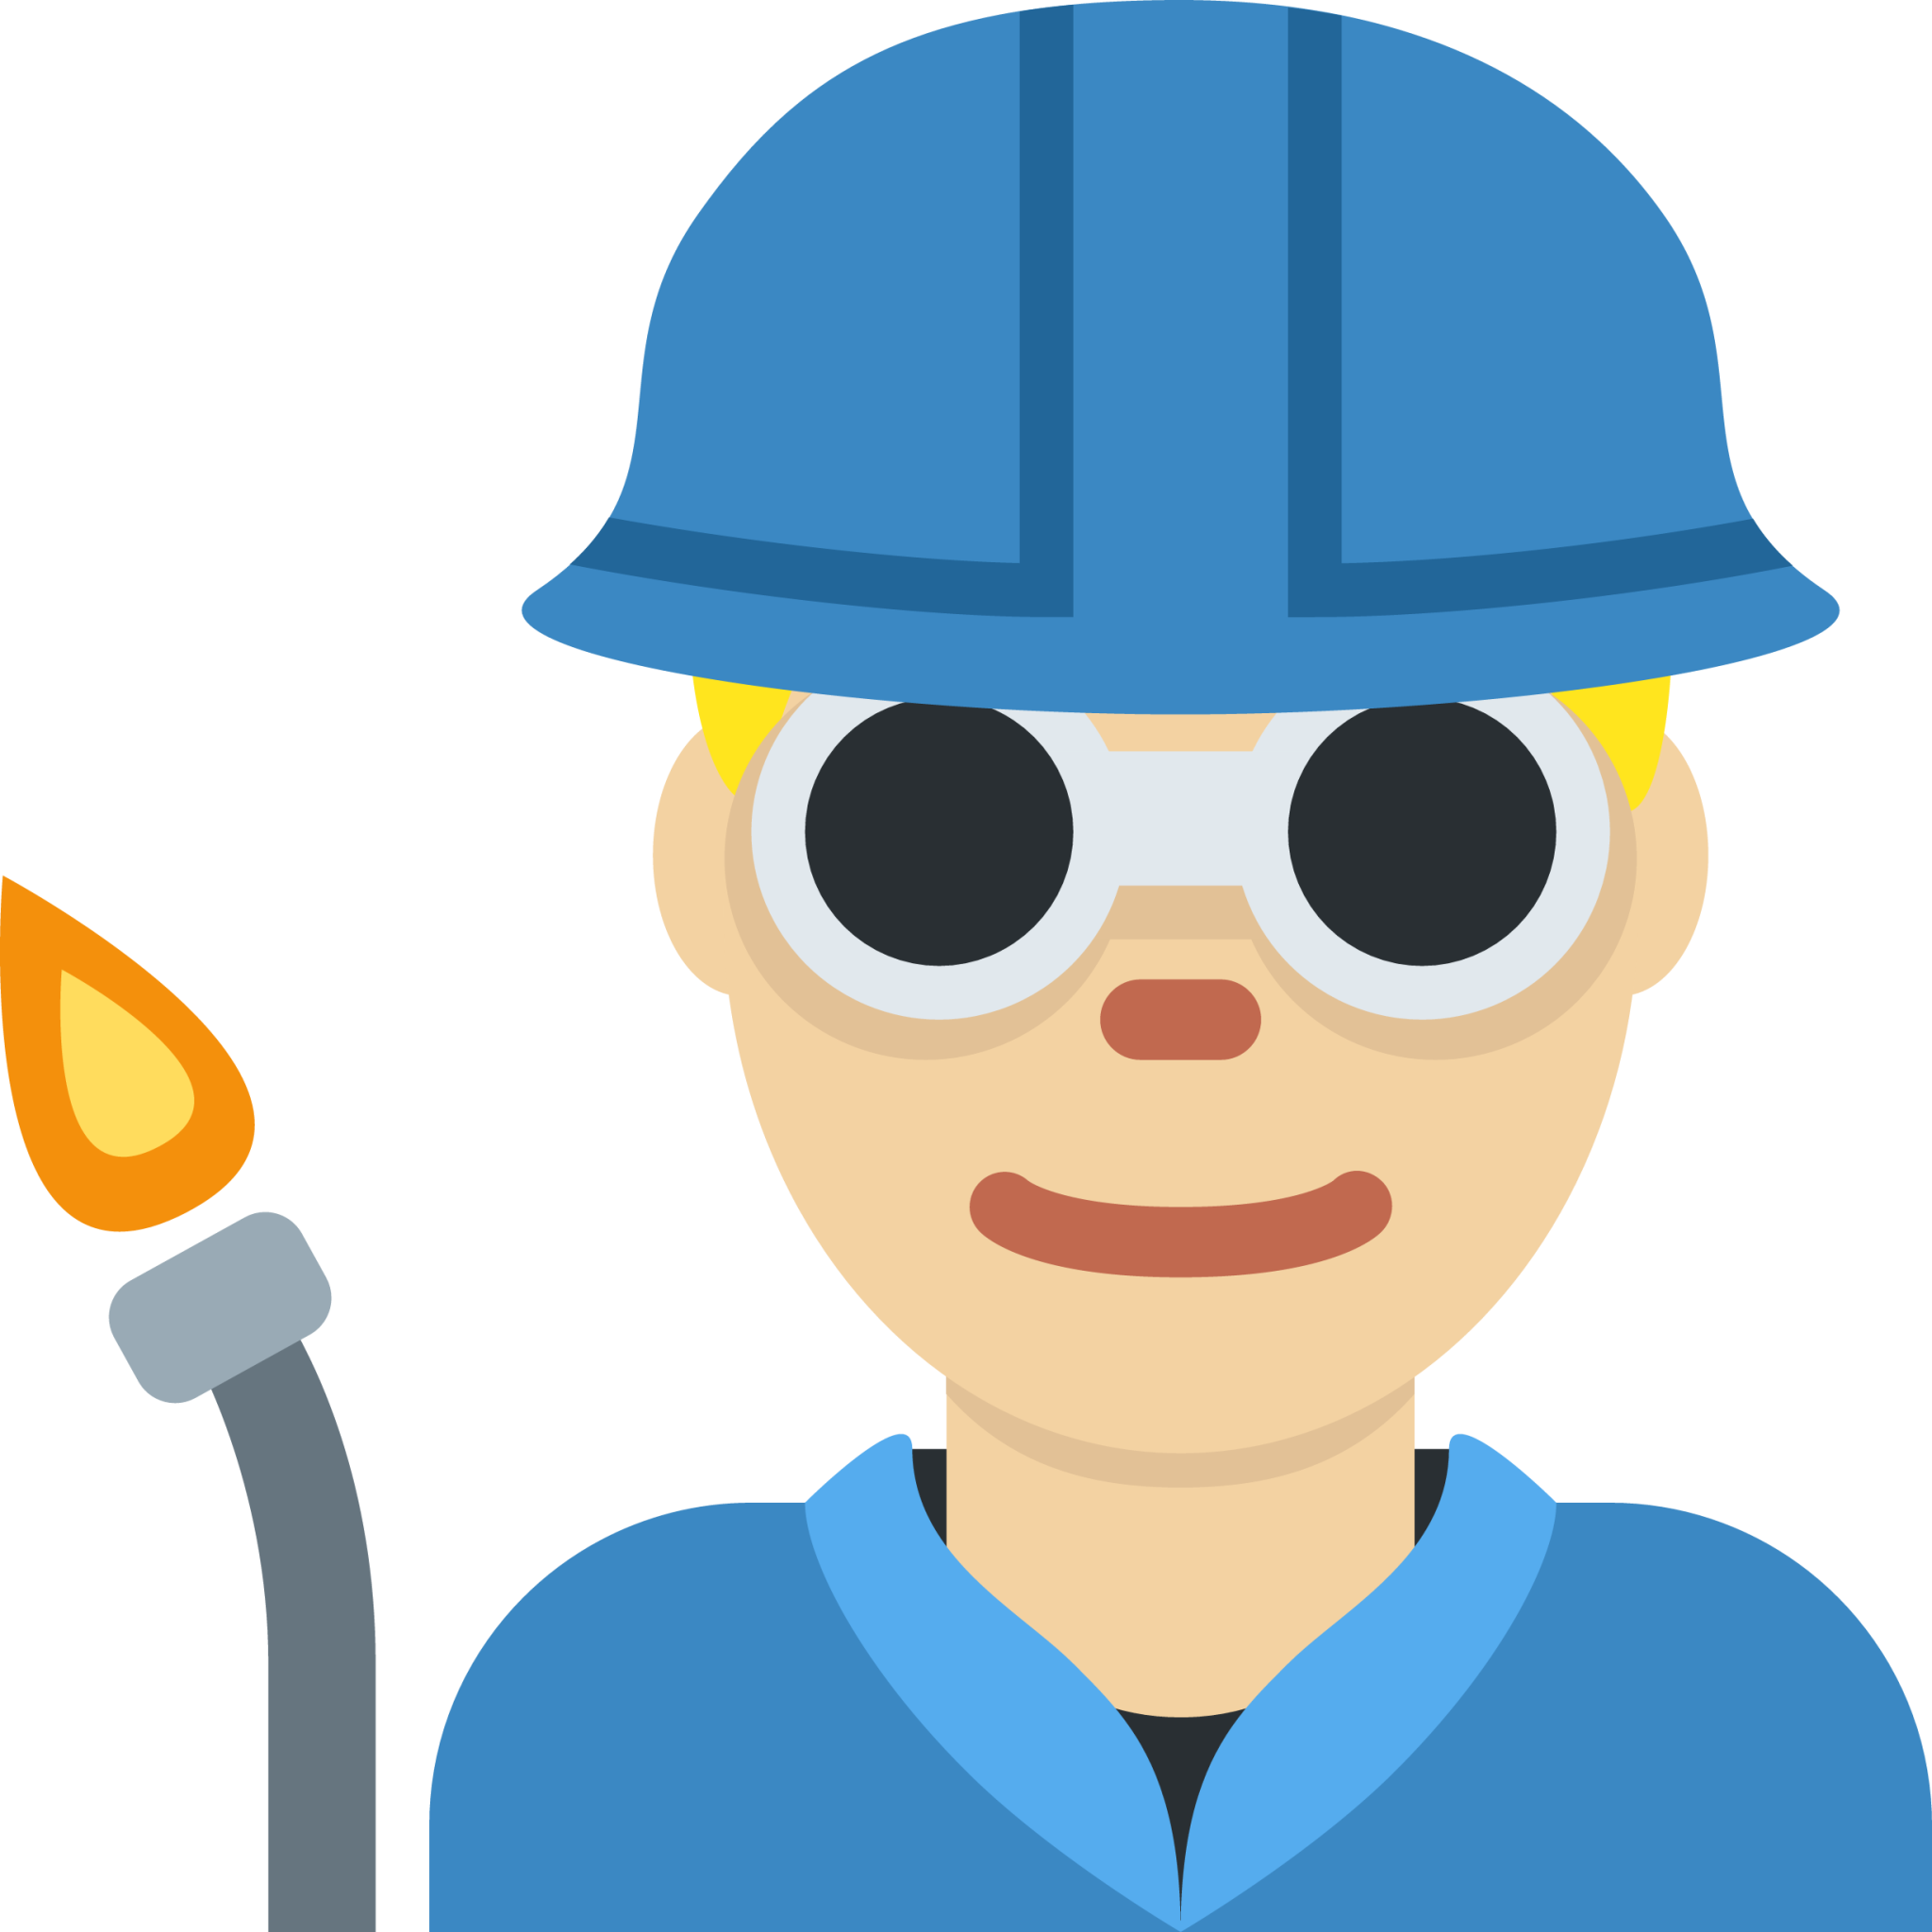 man factory worker: medium-light skin tone emoji